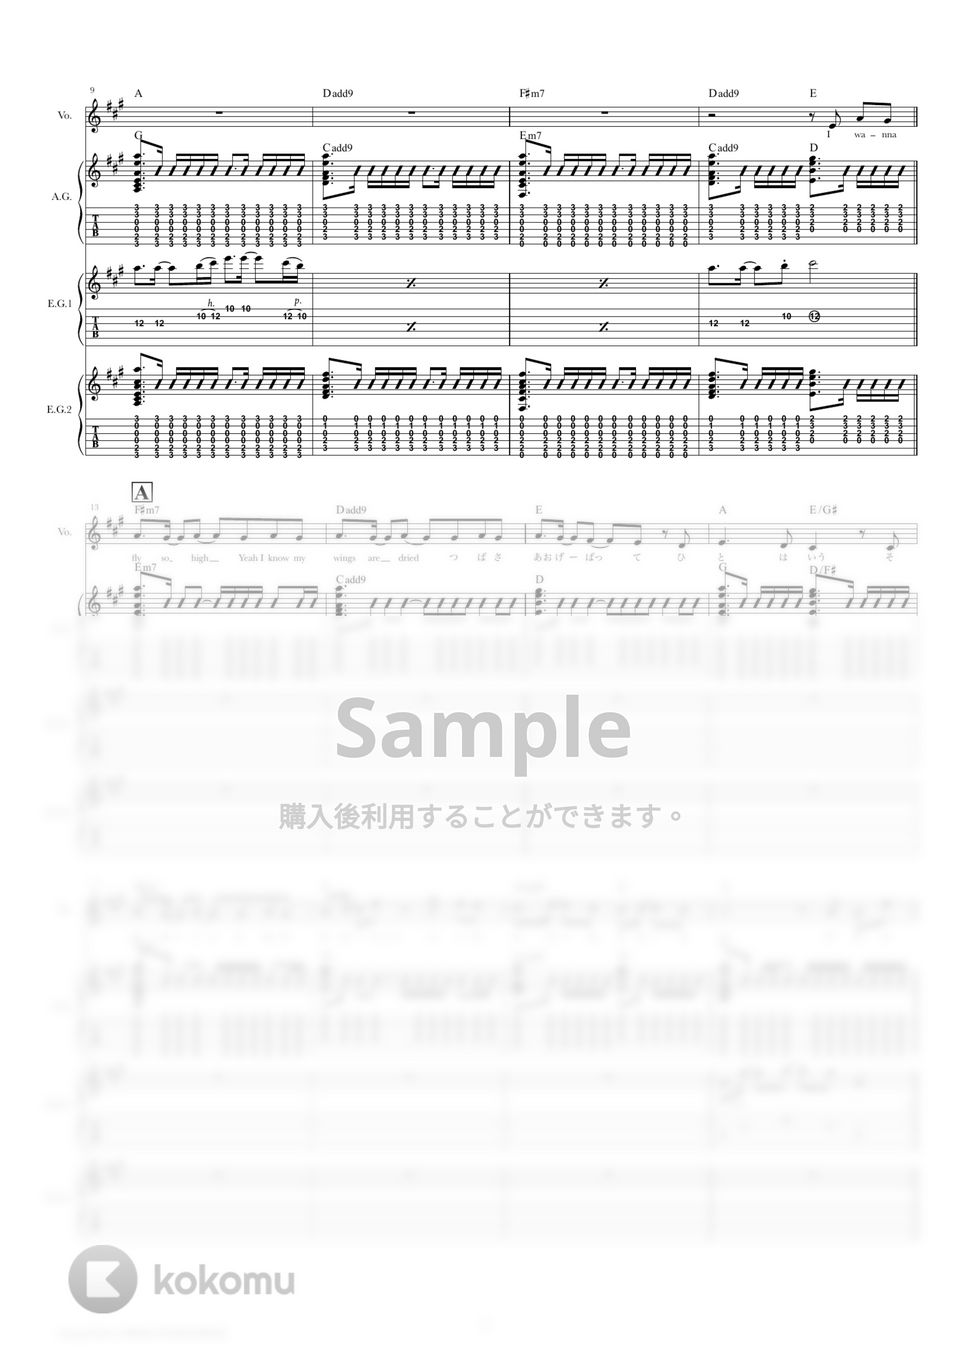 ALEXANDROS - ワタリドリ (ギタースコア・歌詞・コード付き) by TRIAD GUITAR SCHOOL